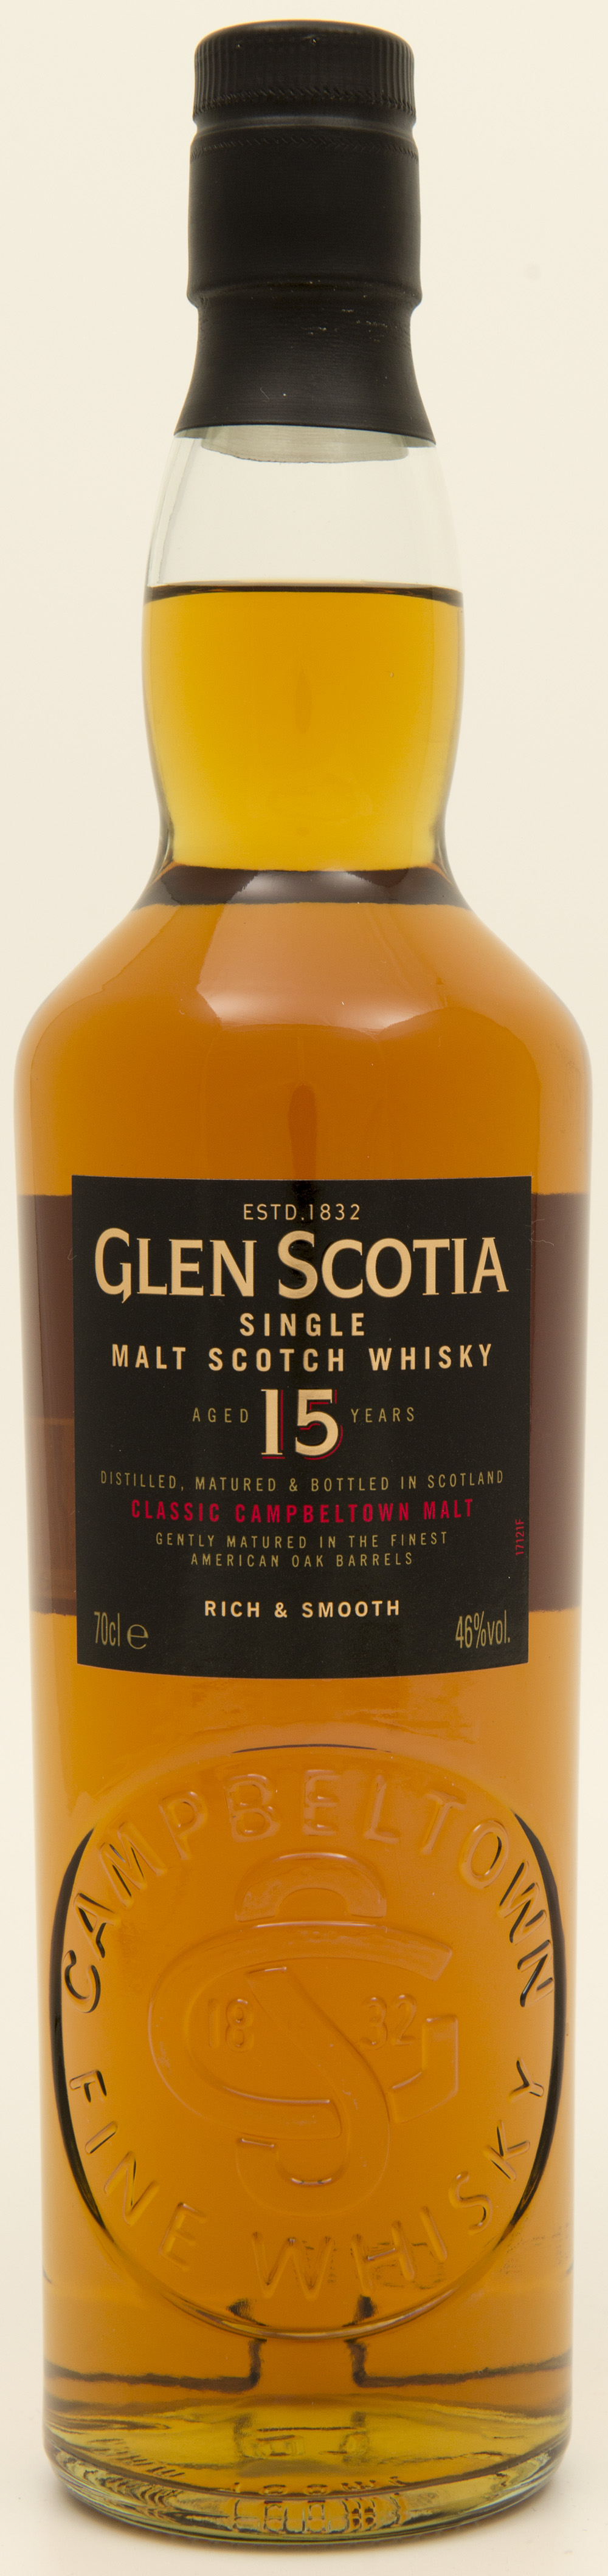 Billede: DSC_1309 - Glen Scotia 15 - bottle front.jpg